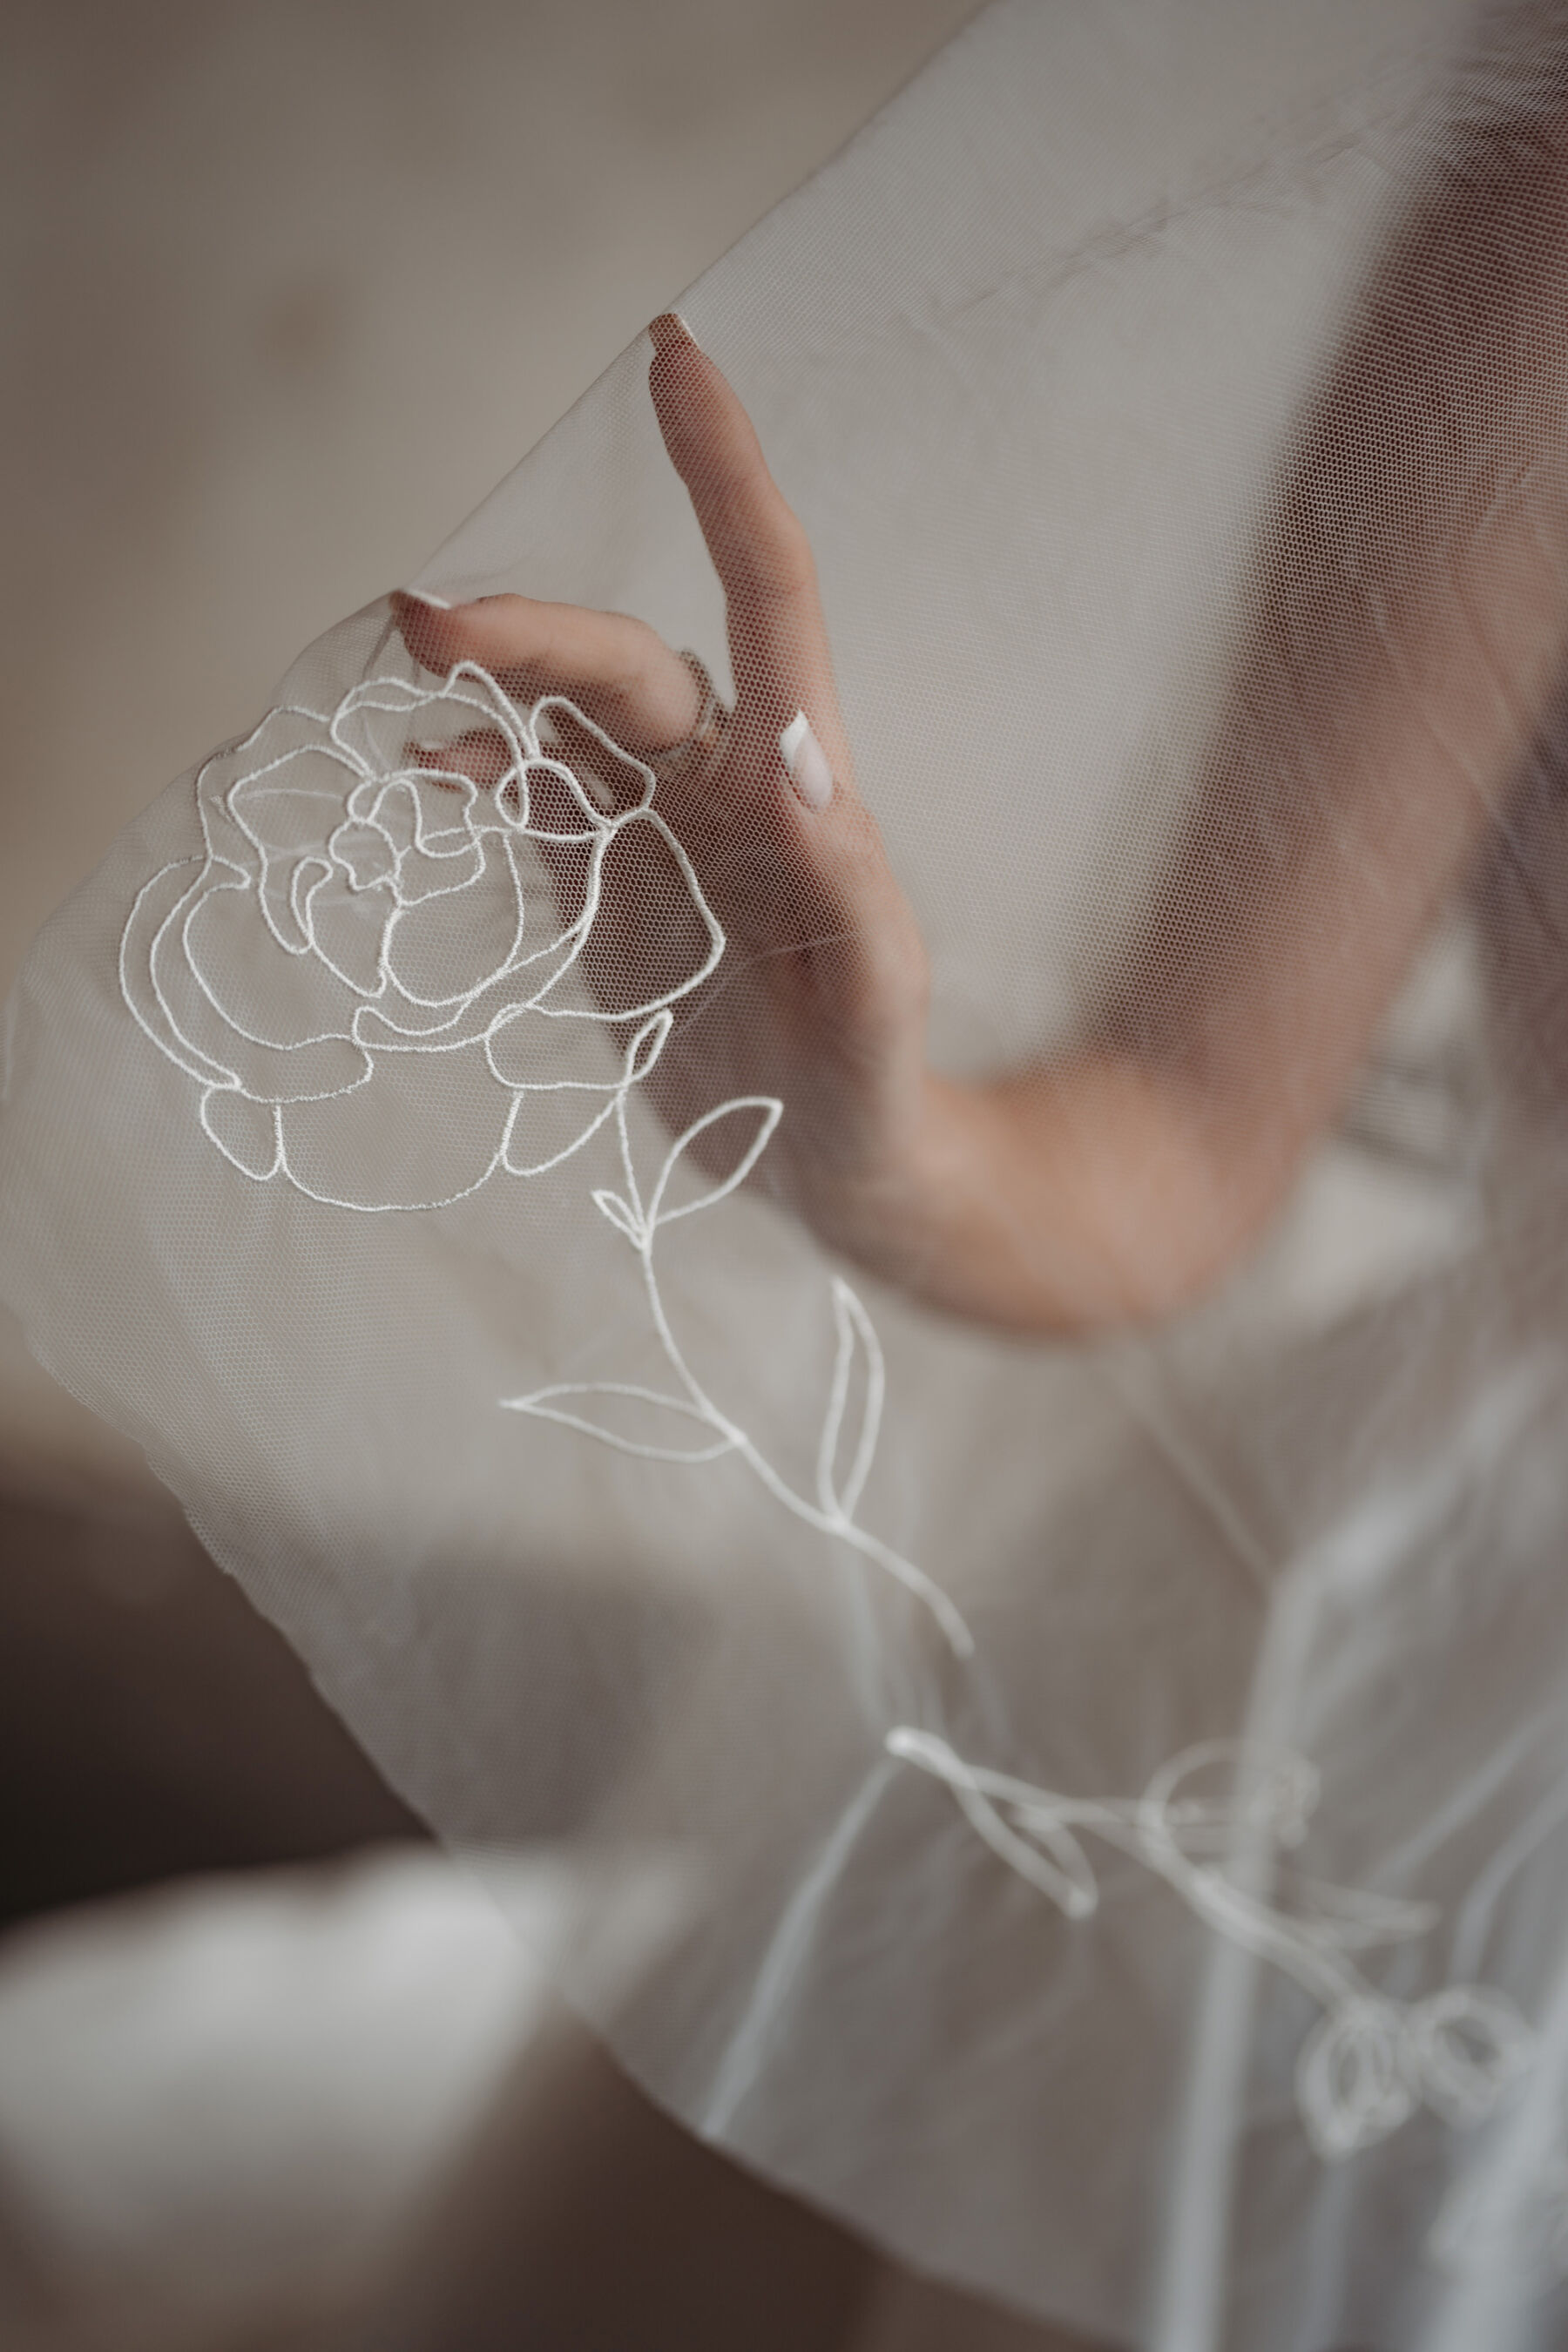 Embroidered wedding veil by Rebecca Anne Designs